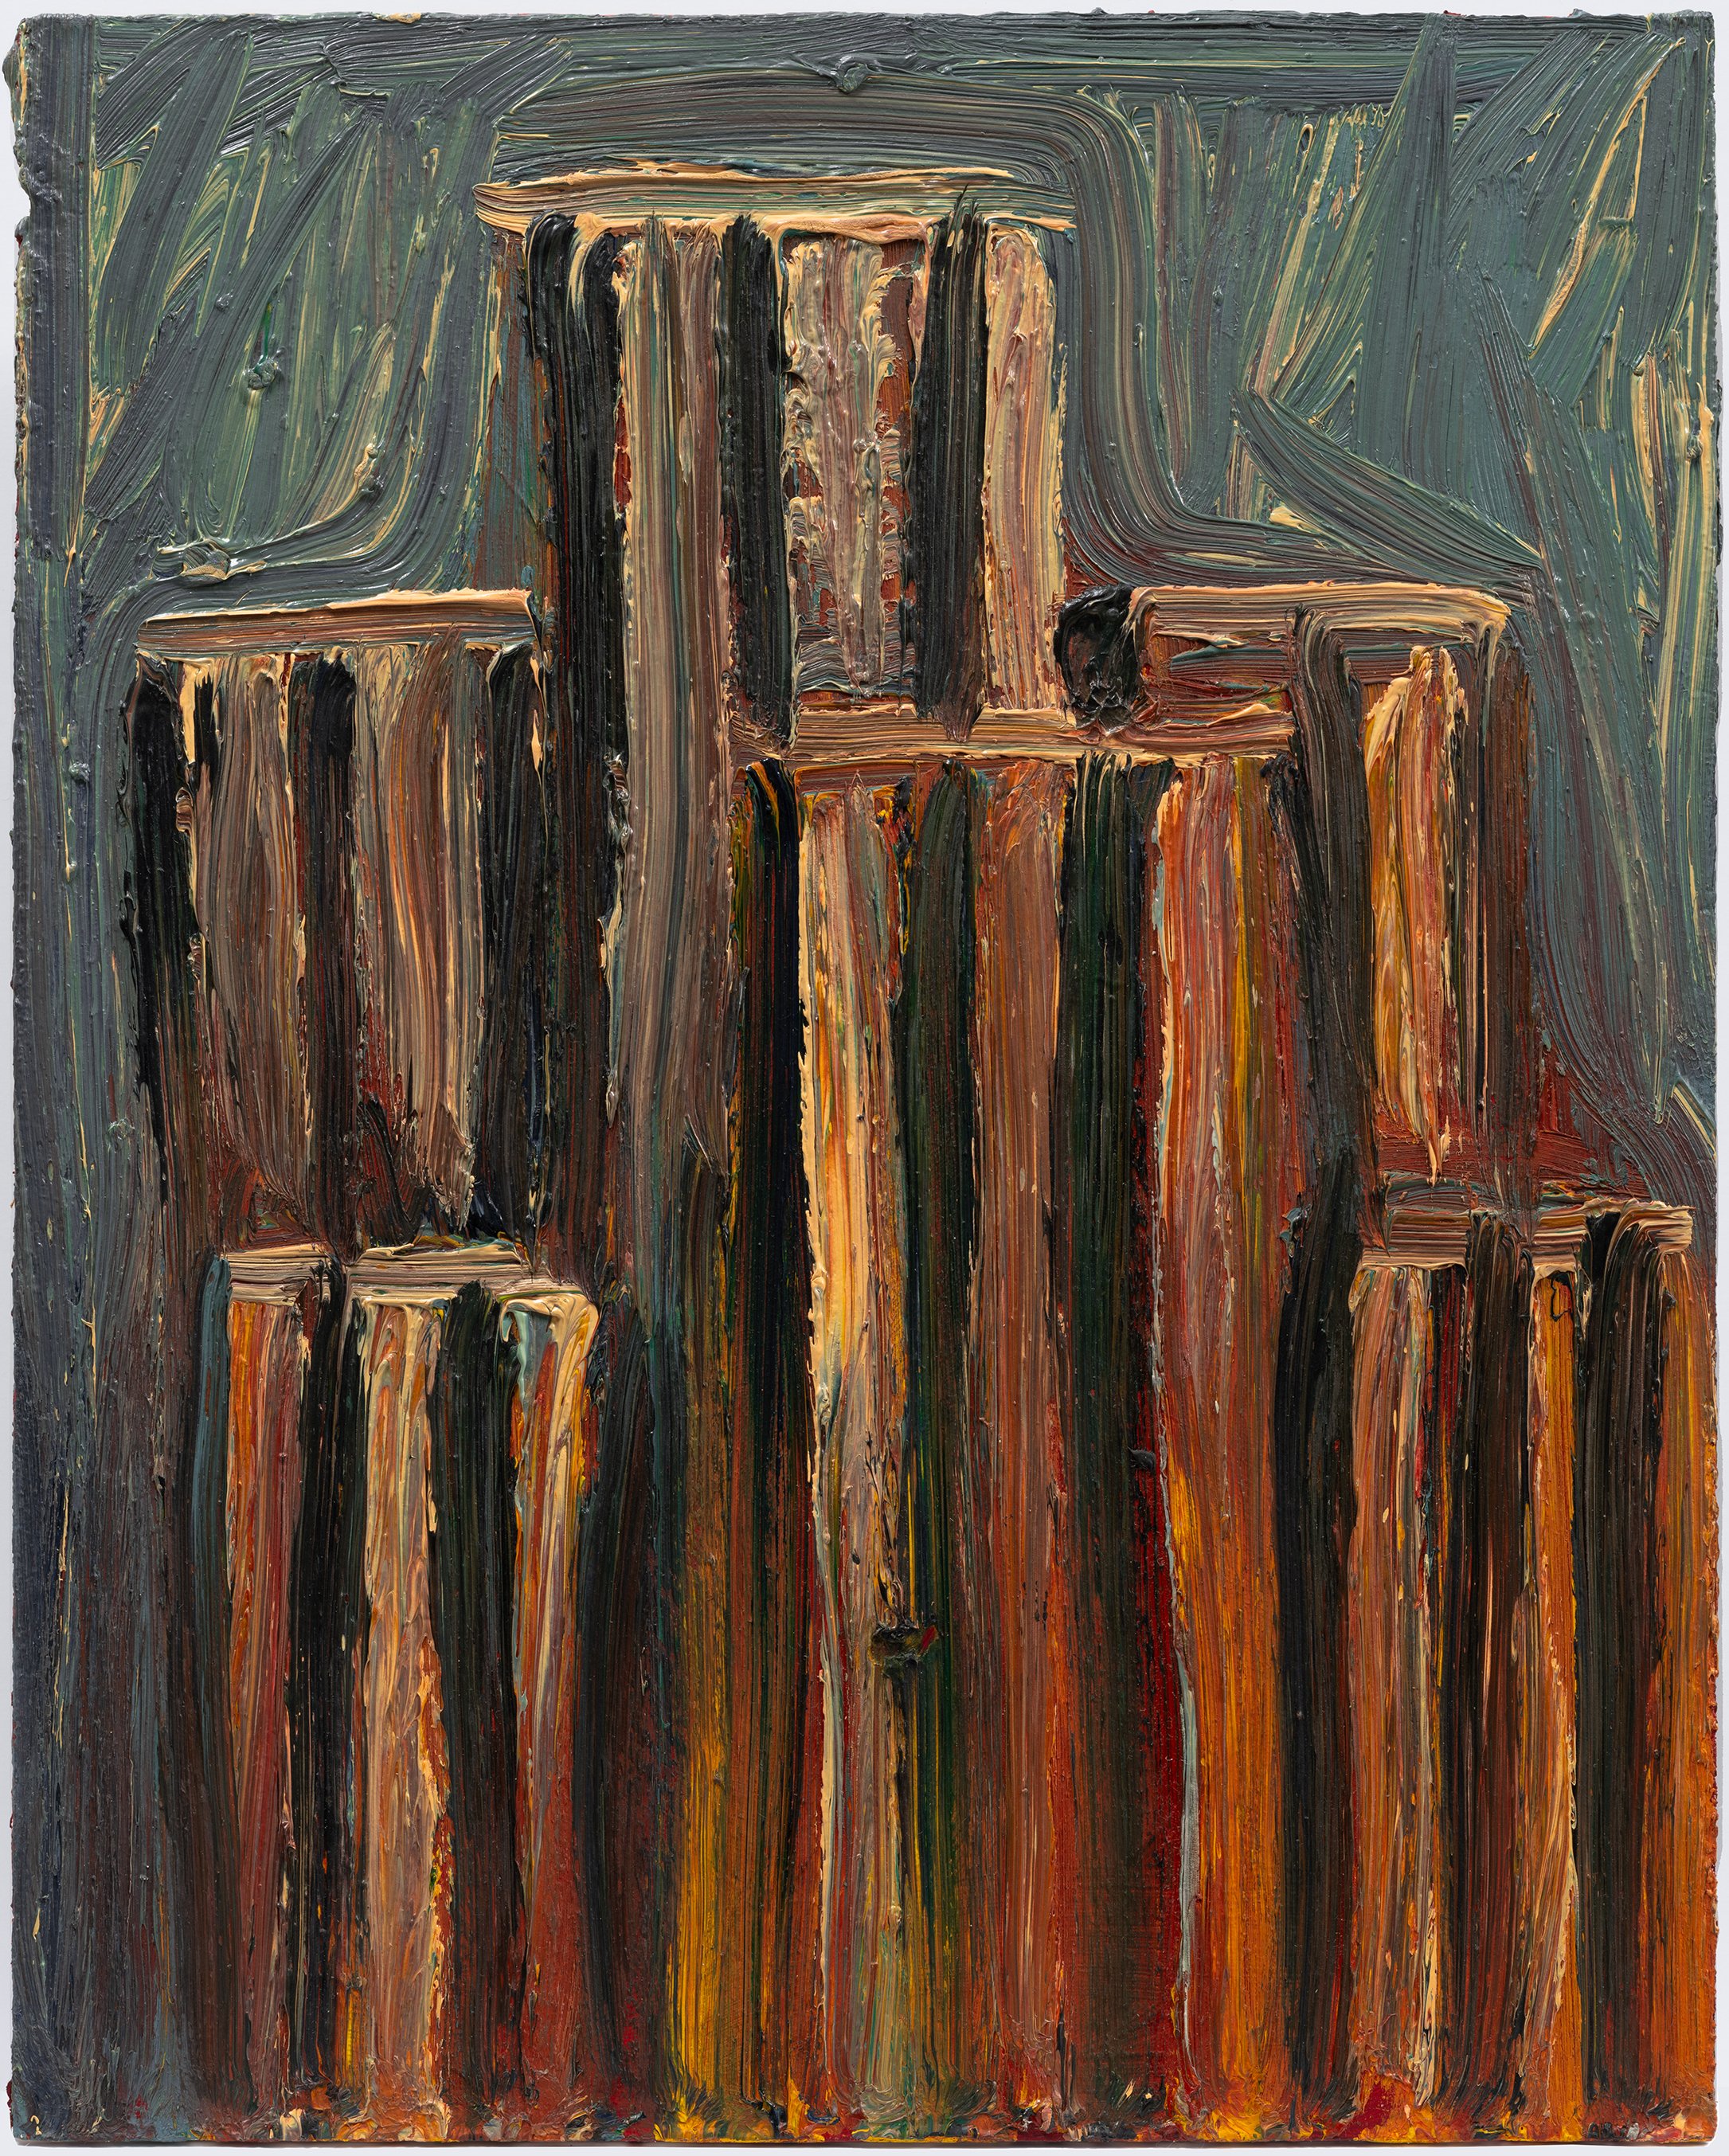   Study for “Untitled (Black Orange Aqua),”  1983. Oil on planel. 15 x 12 in. 